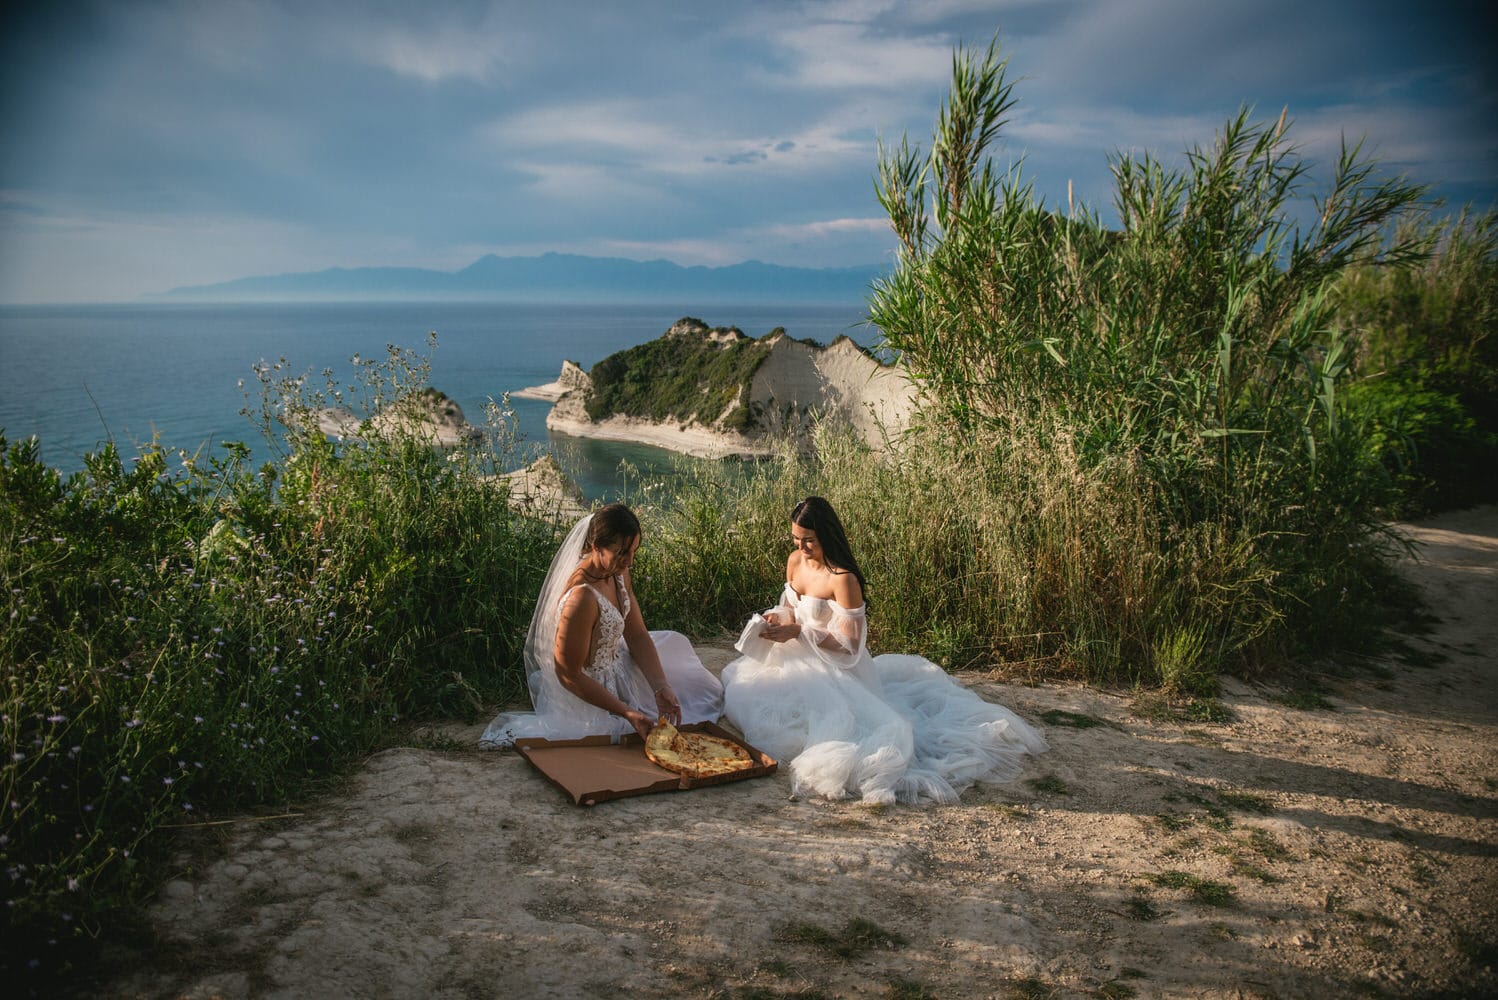 Playful embrace: Brides enjoy pizza at a shop near the cliffs during their Corfu elopement.